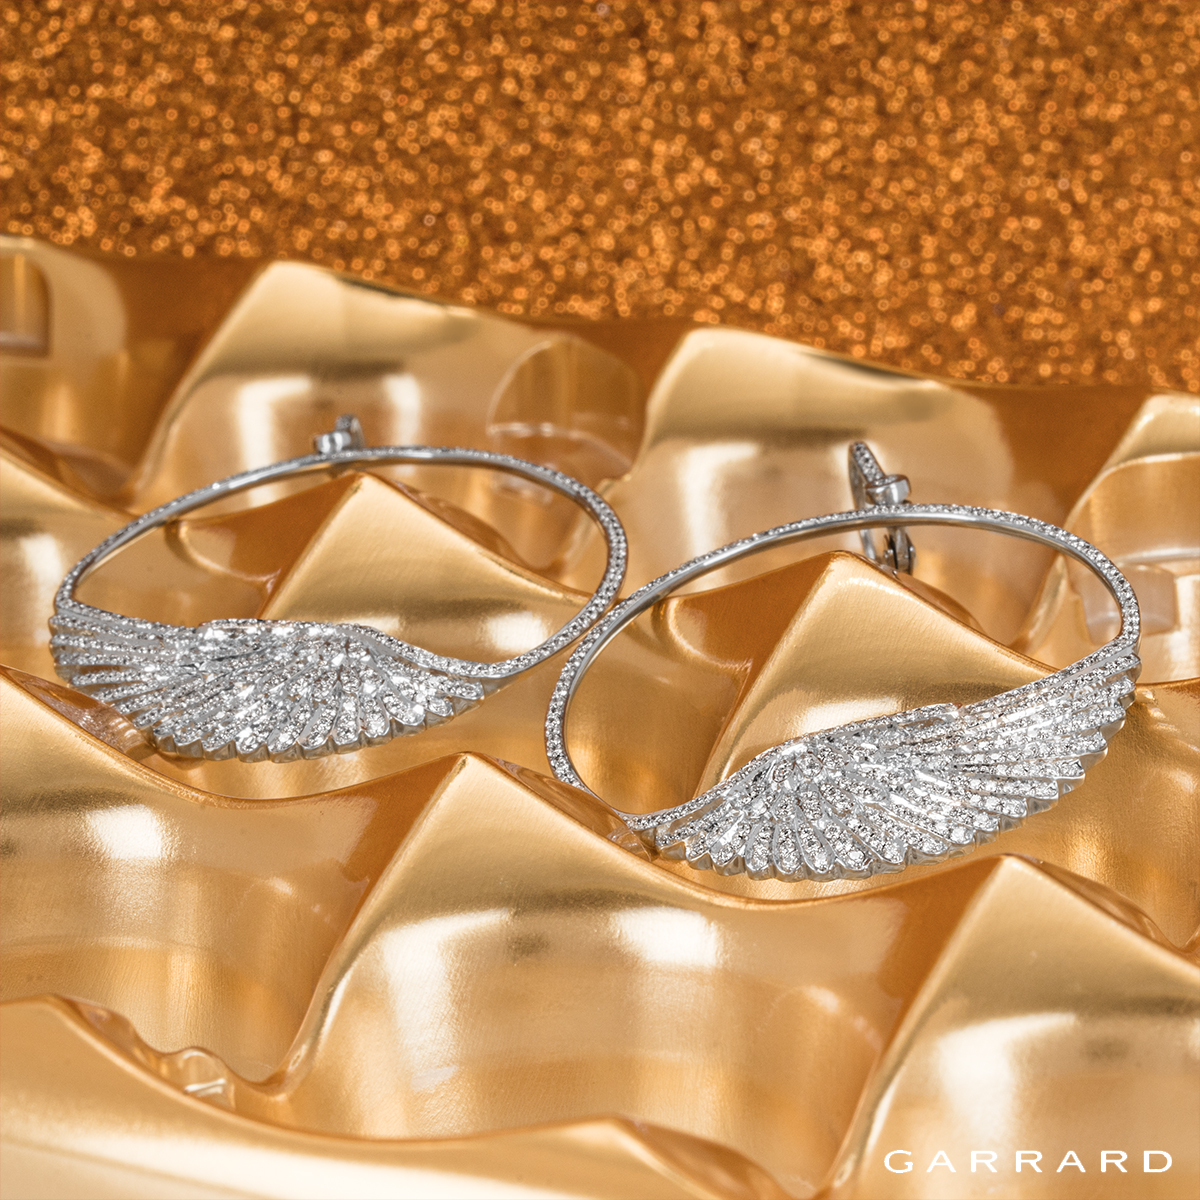 Garrard White Gold Wings Classic Diamond Earrings